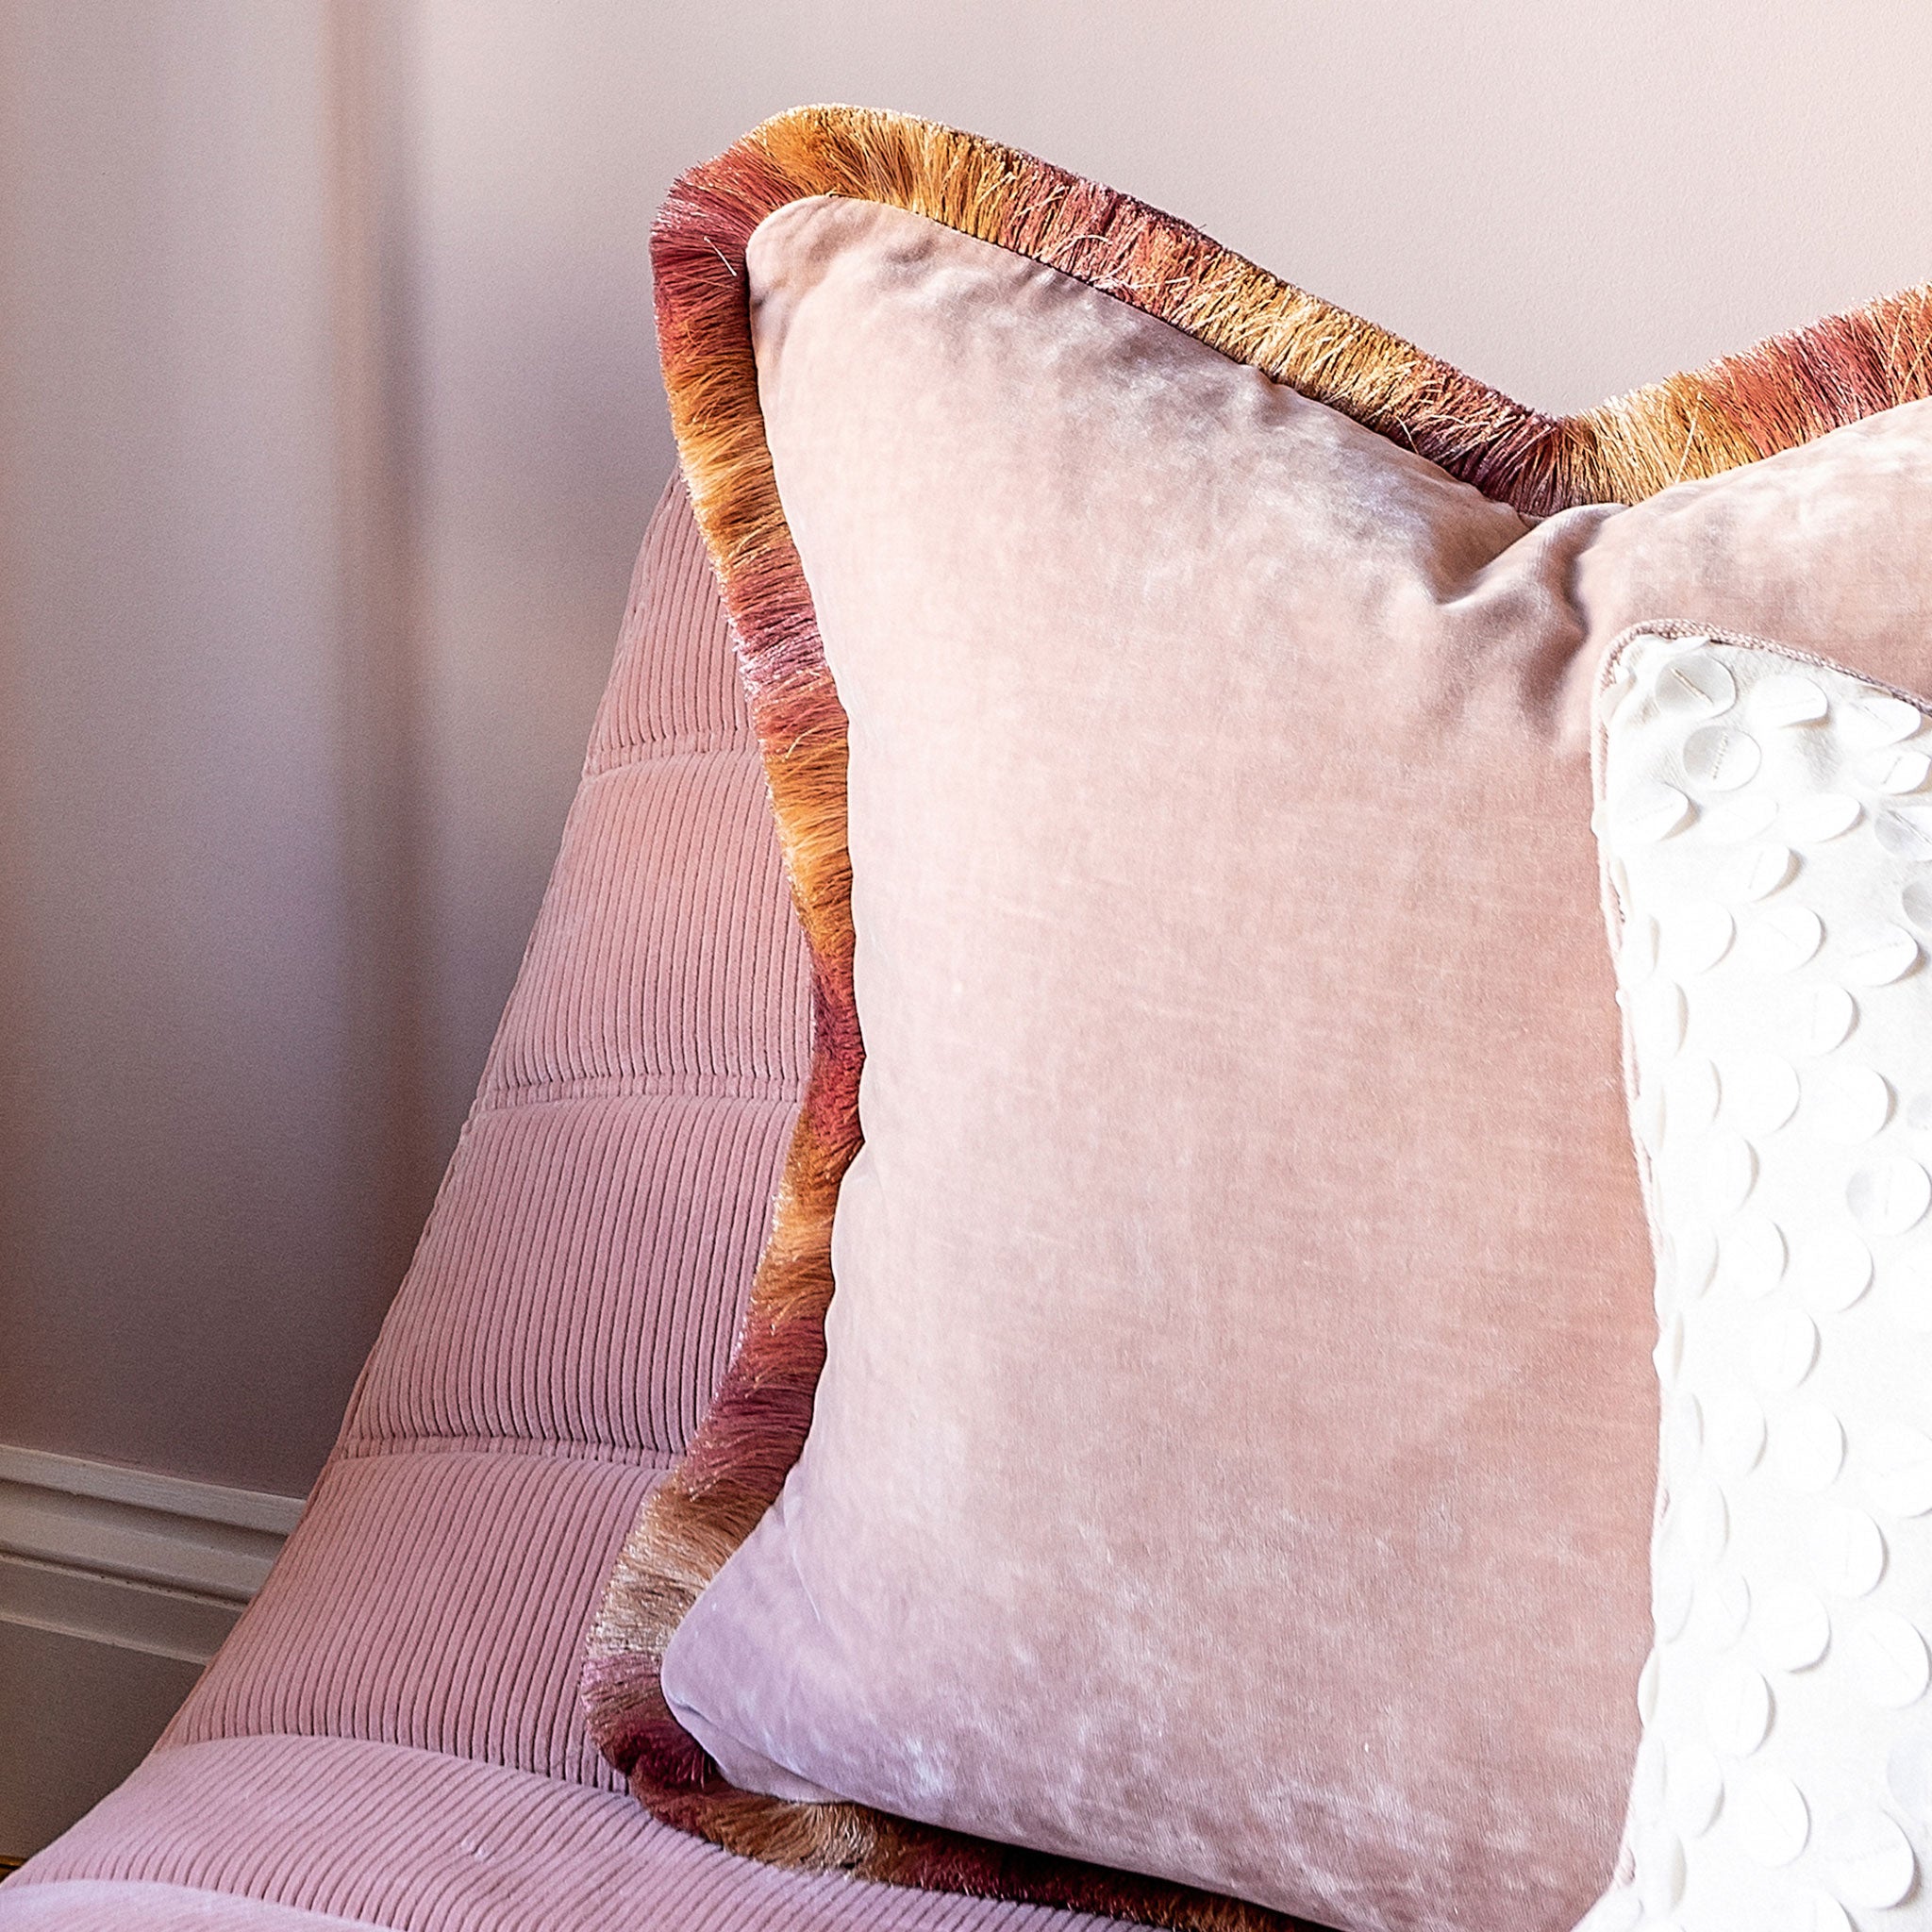 Luxury Cushion, Blush Pink Velvet Fabric, pink ombre fringe , Bedroom, Living Room